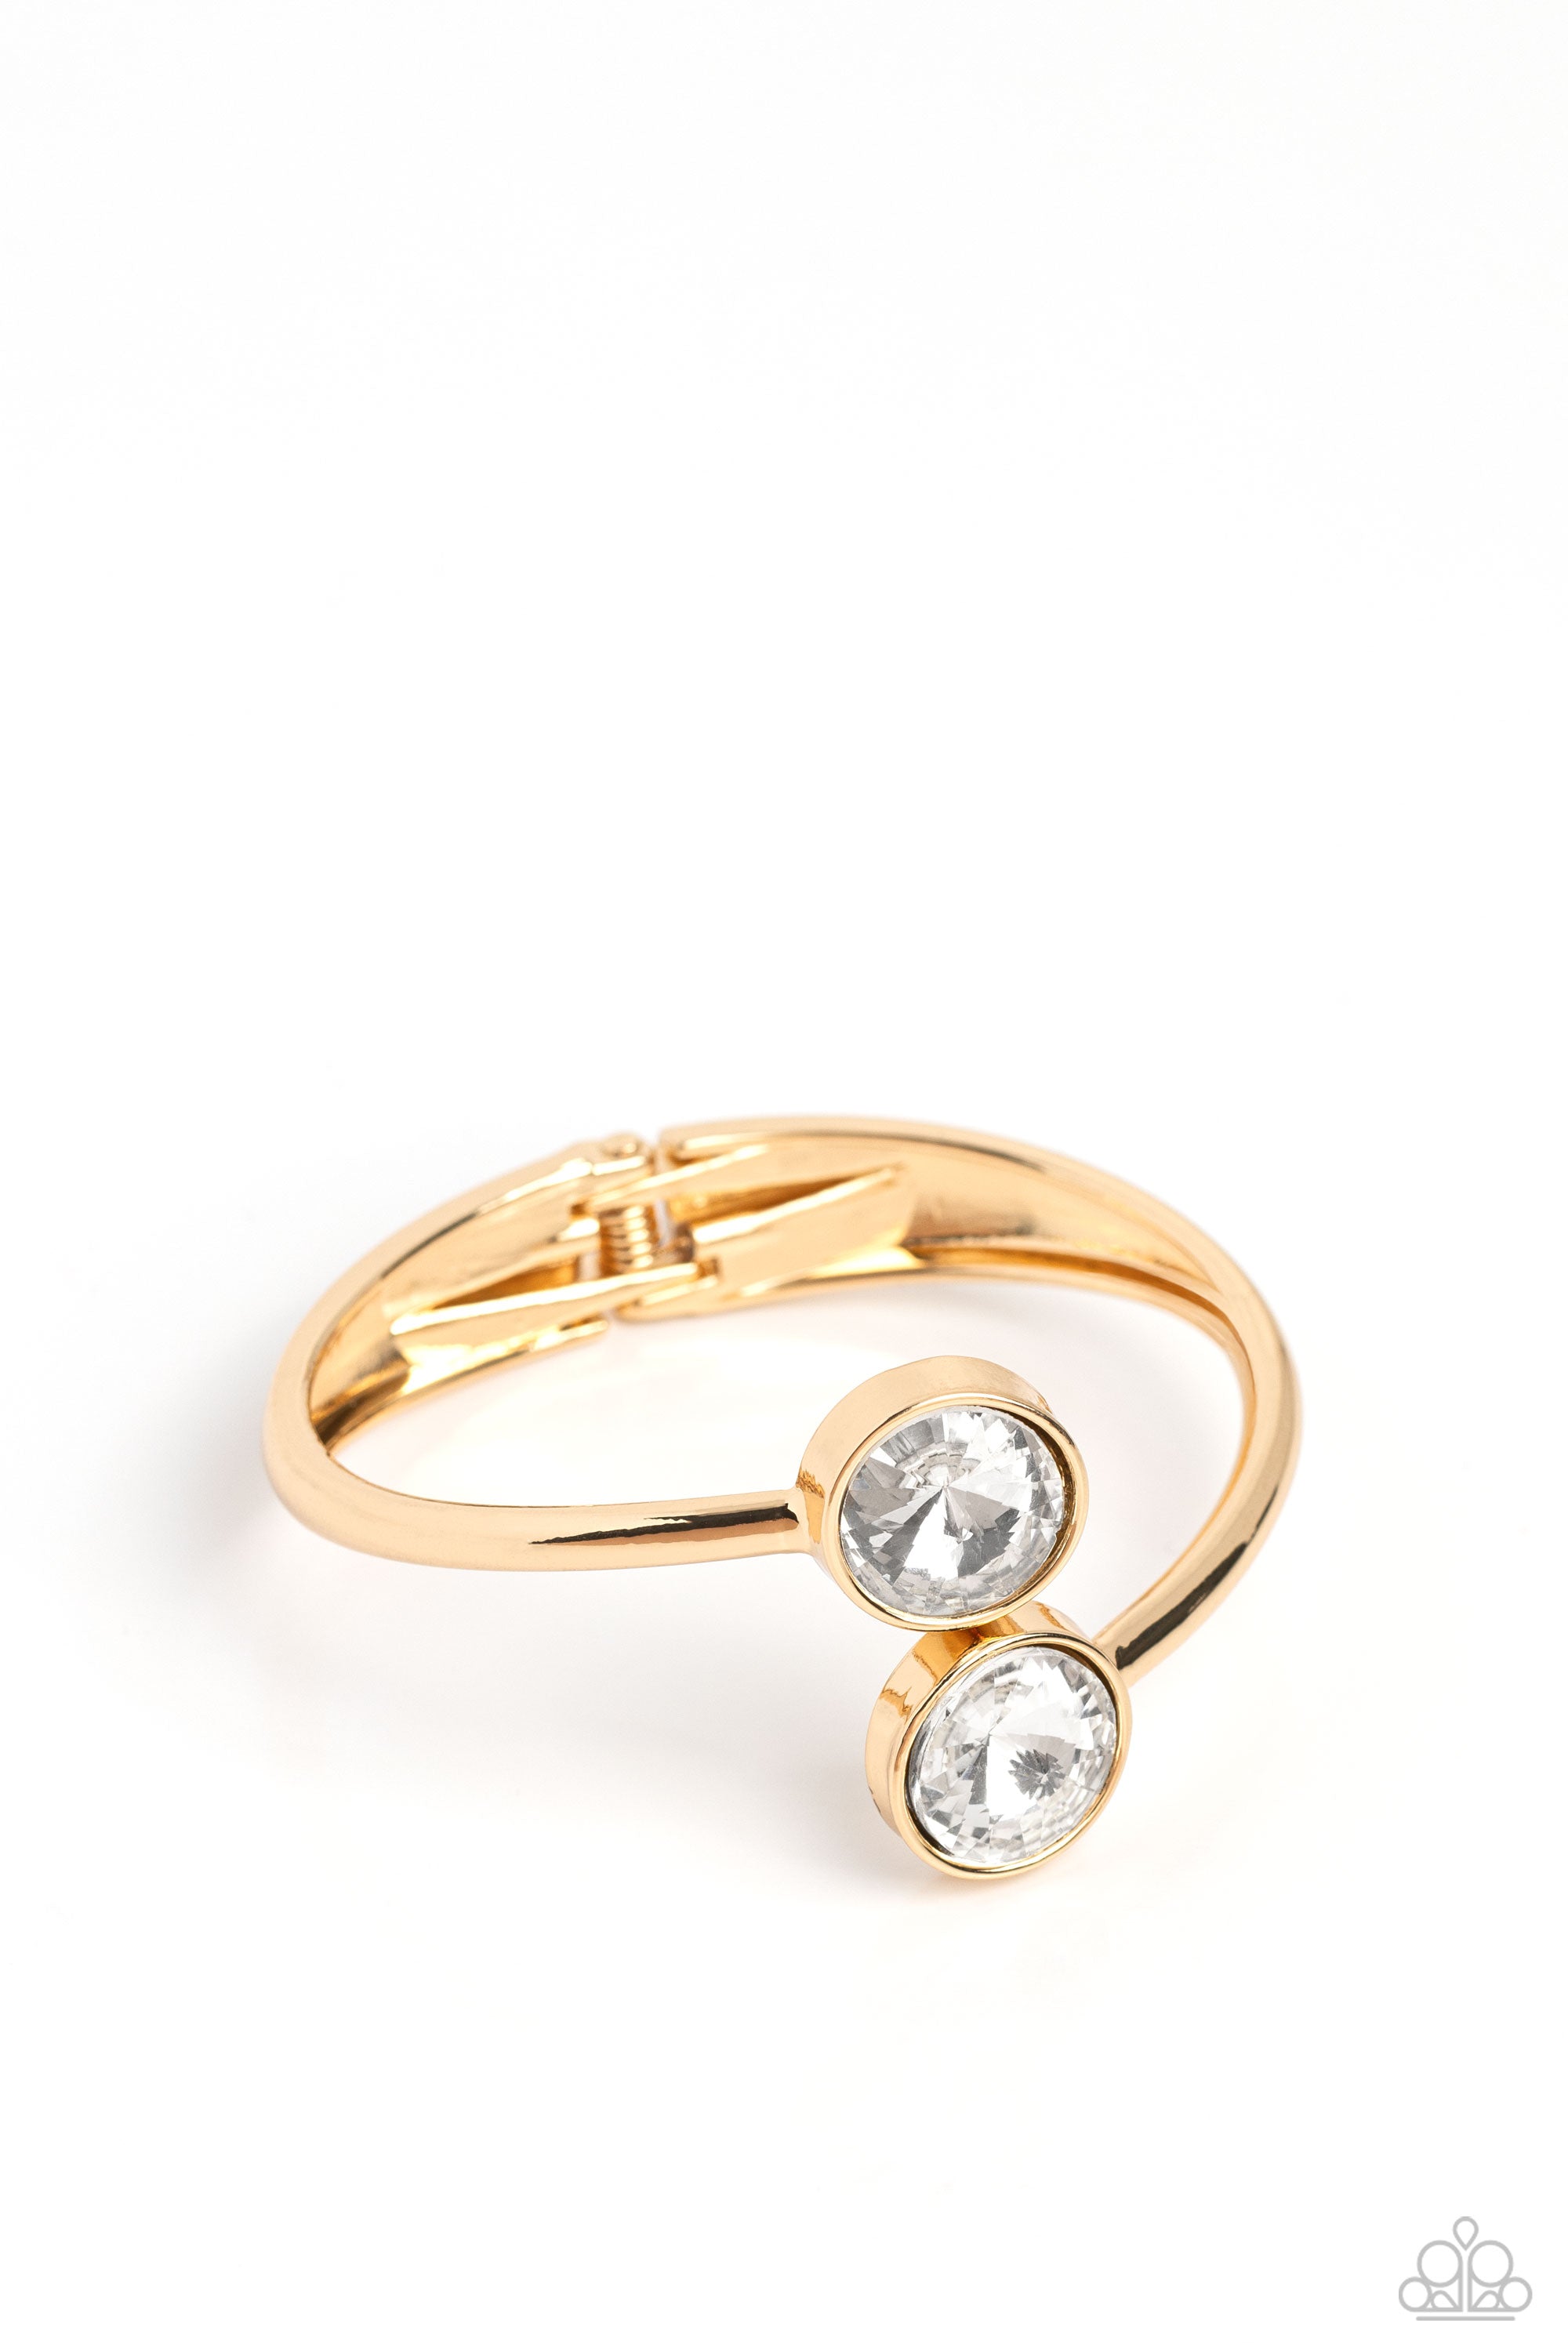 Daily Dazzle Gold & White Rhinestone Bracelet - Paparazzi Accessories- lightbox - CarasShop.com - $5 Jewelry by Cara Jewels